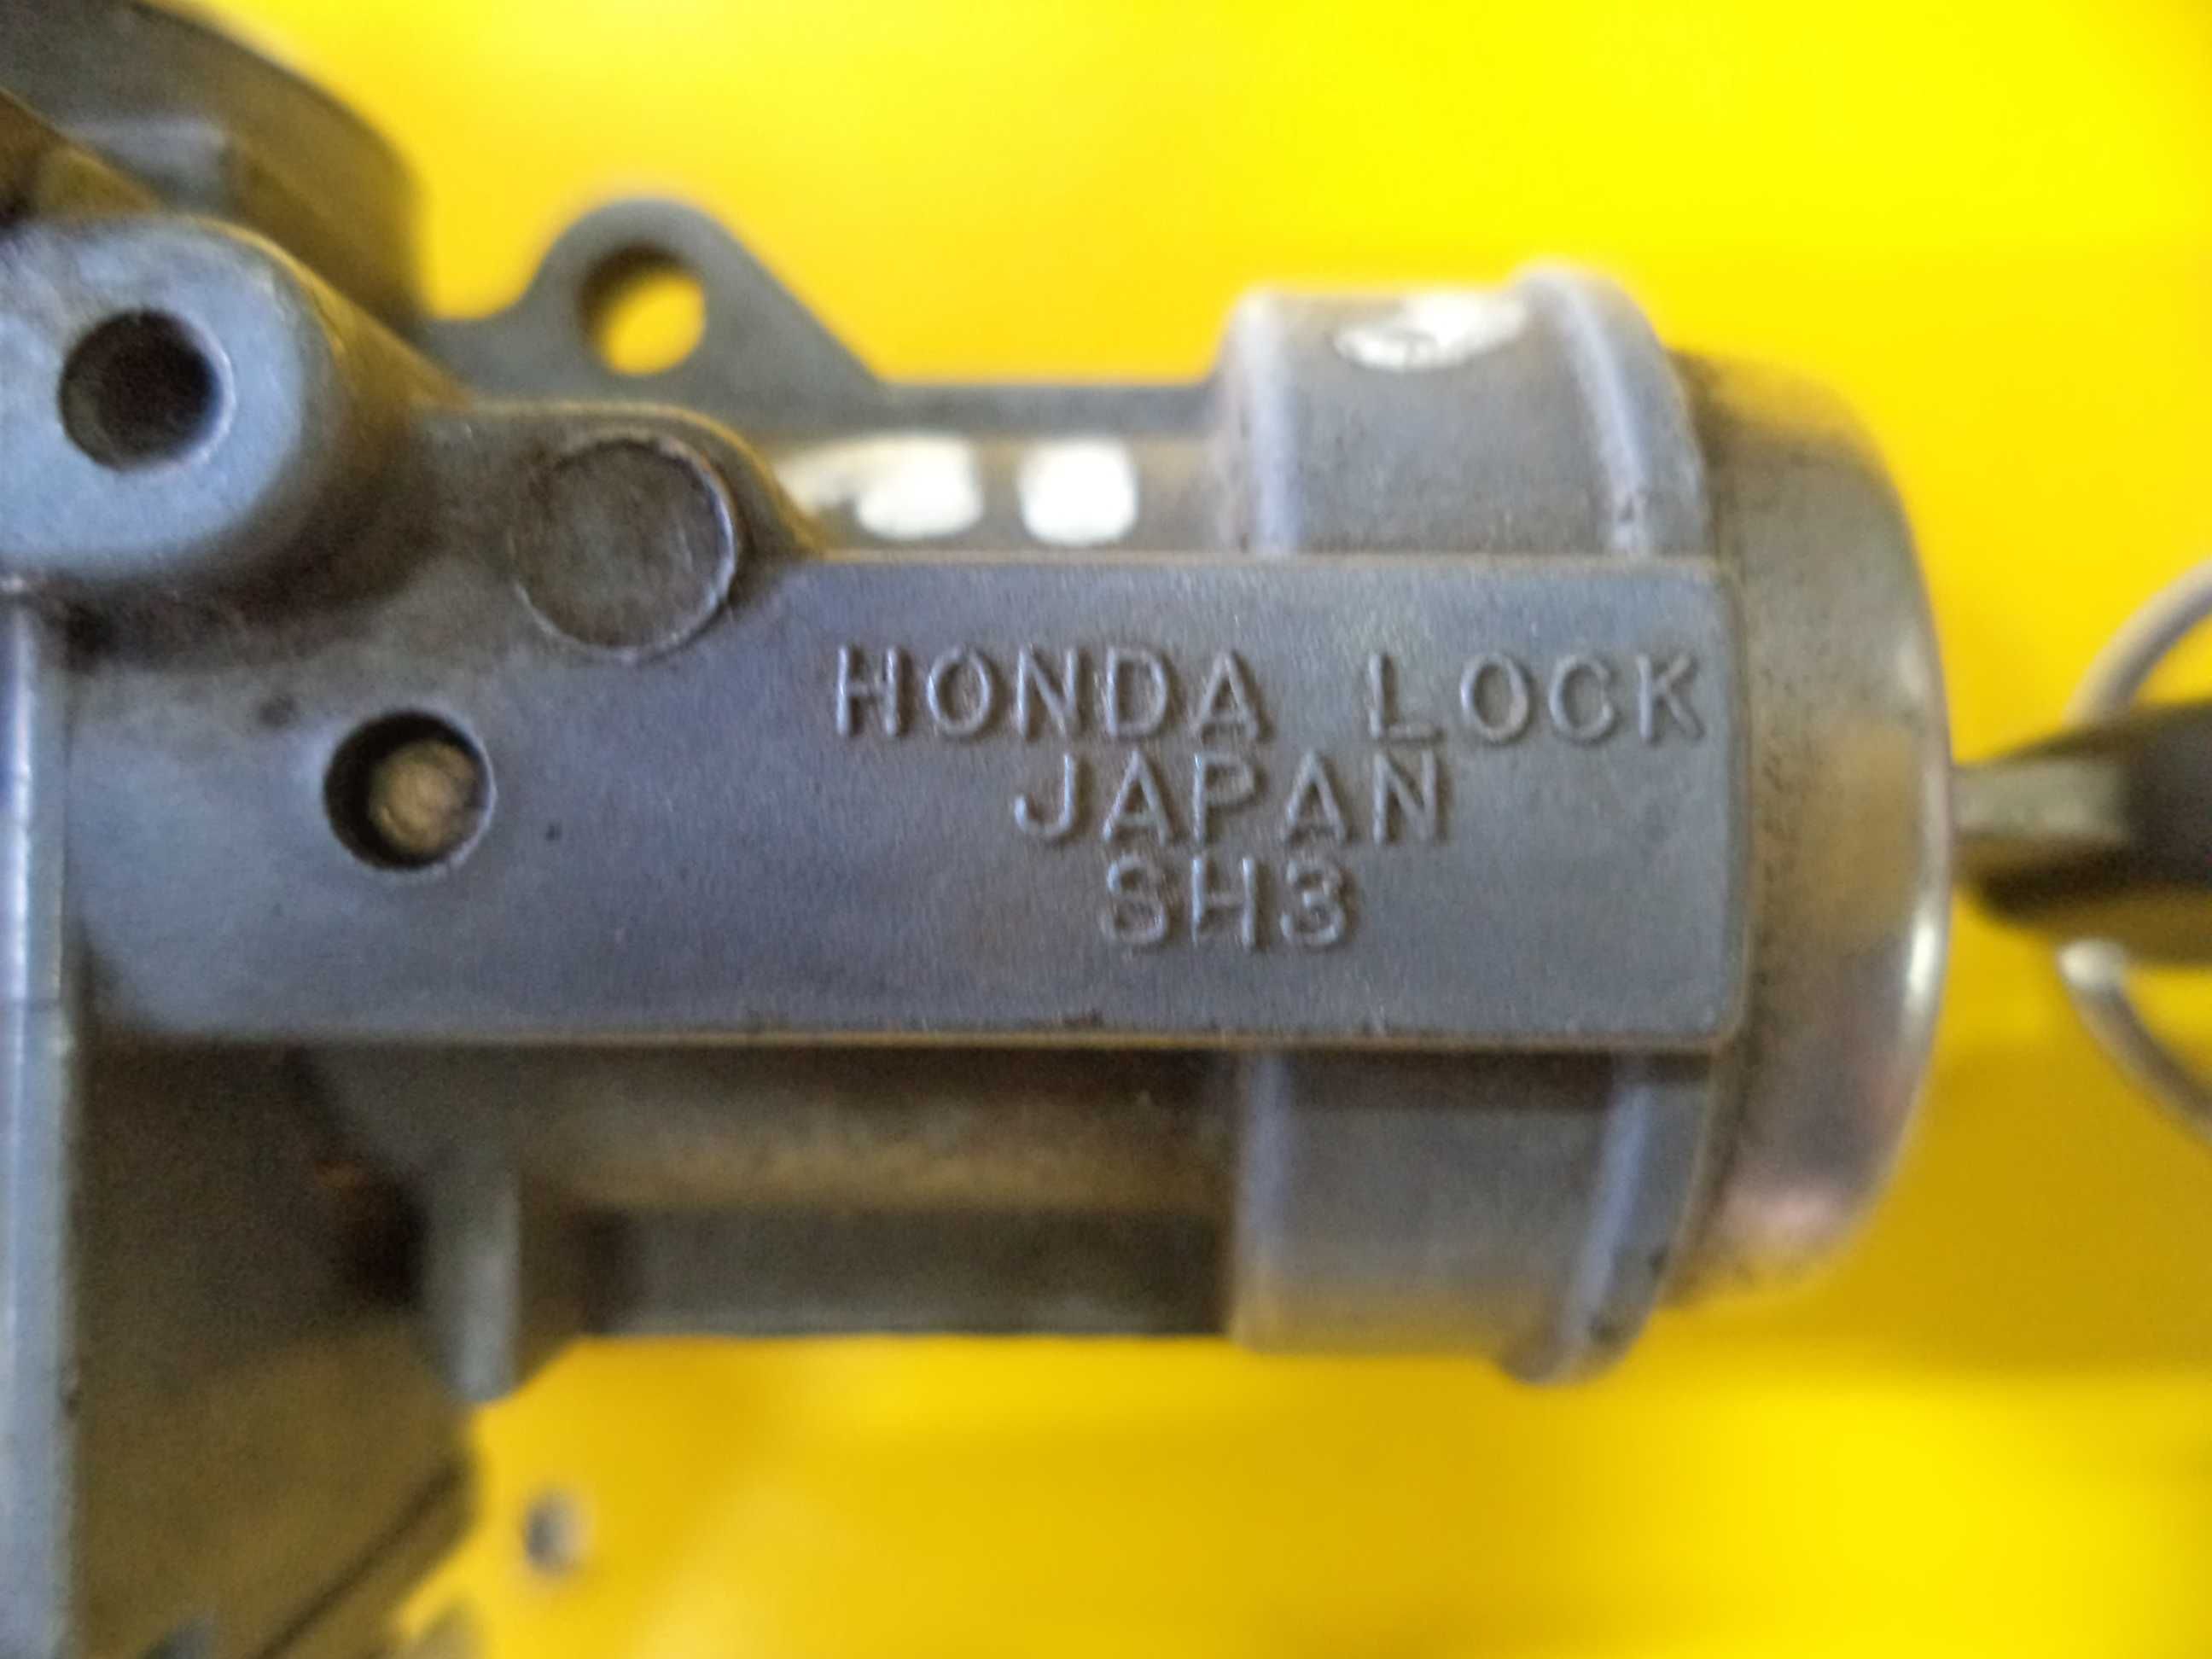 Замок зажигания Honda Civic з 85-90 р.в.  Honda Lock Japan SH3